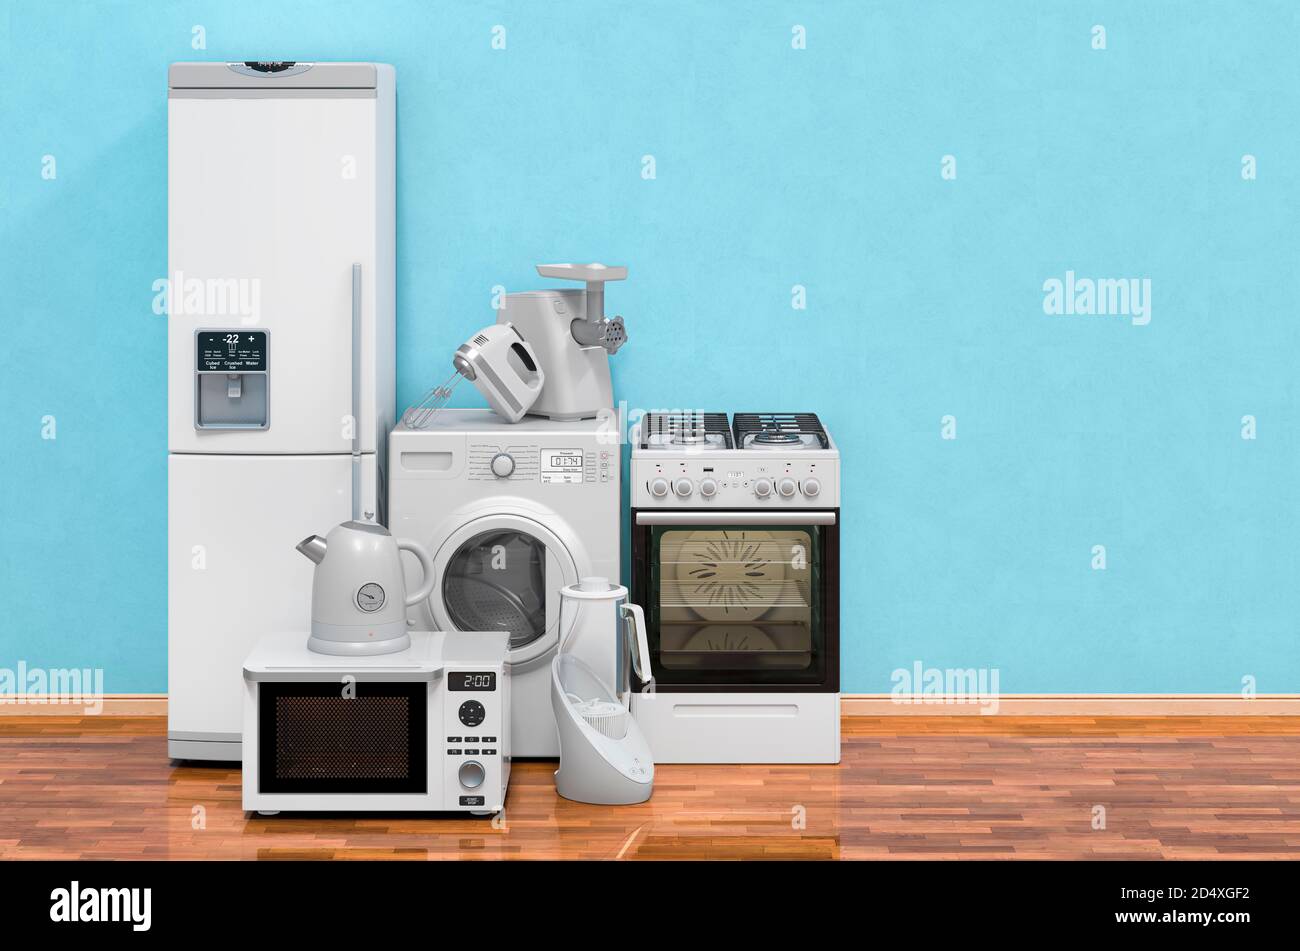 https://c8.alamy.com/comp/2D4XGF2/modern-kitchen-appliances-in-room-on-the-wooden-floor-3d-rendering-2D4XGF2.jpg